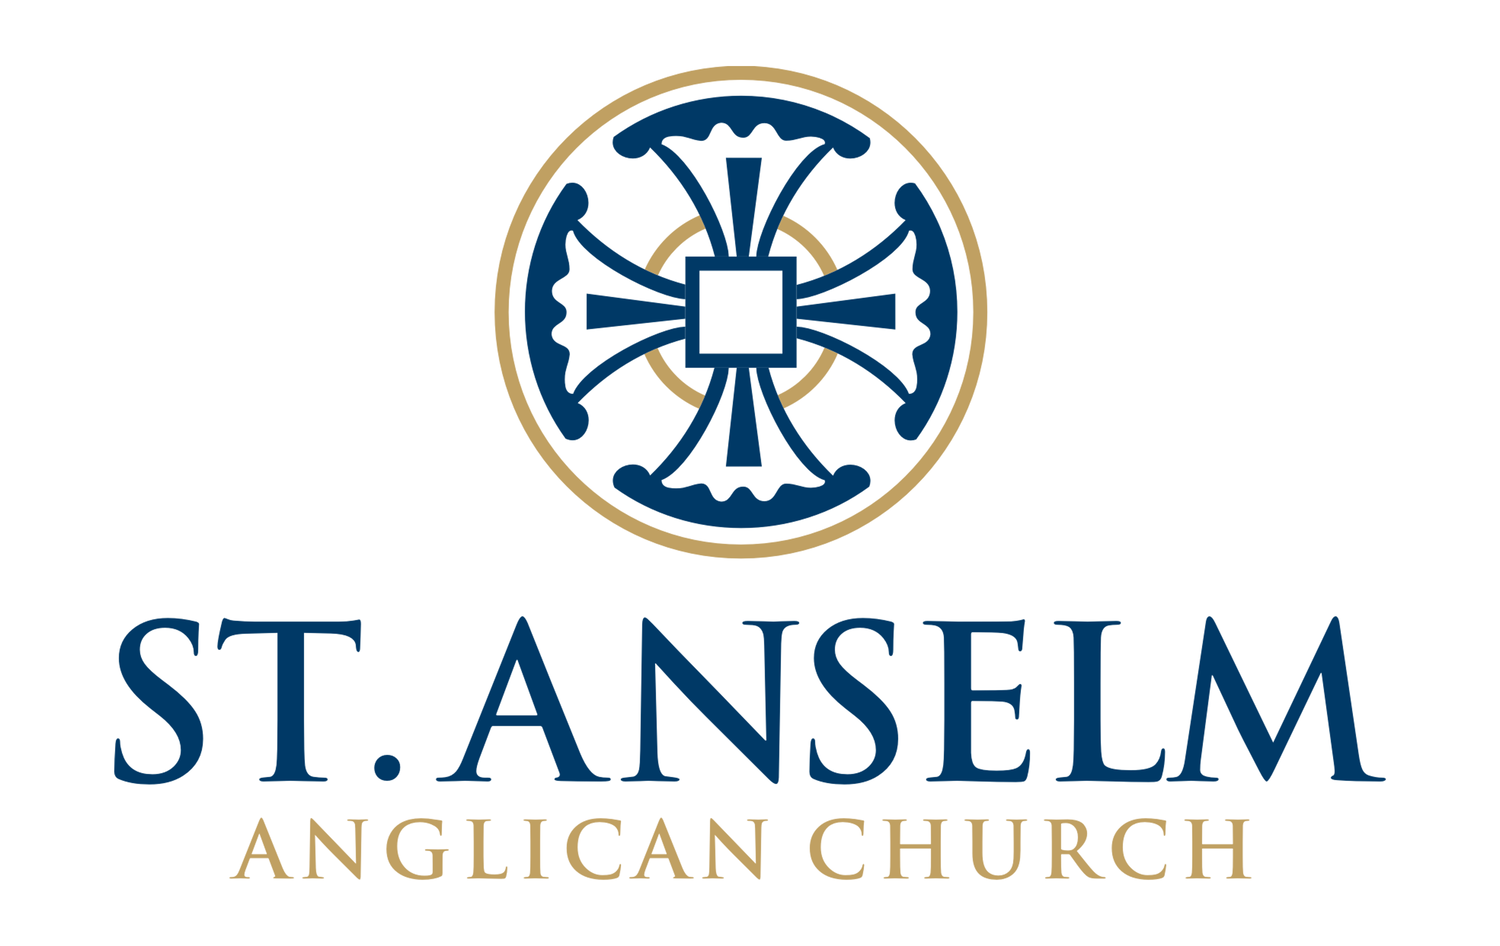 St. Anselm Anglican Church